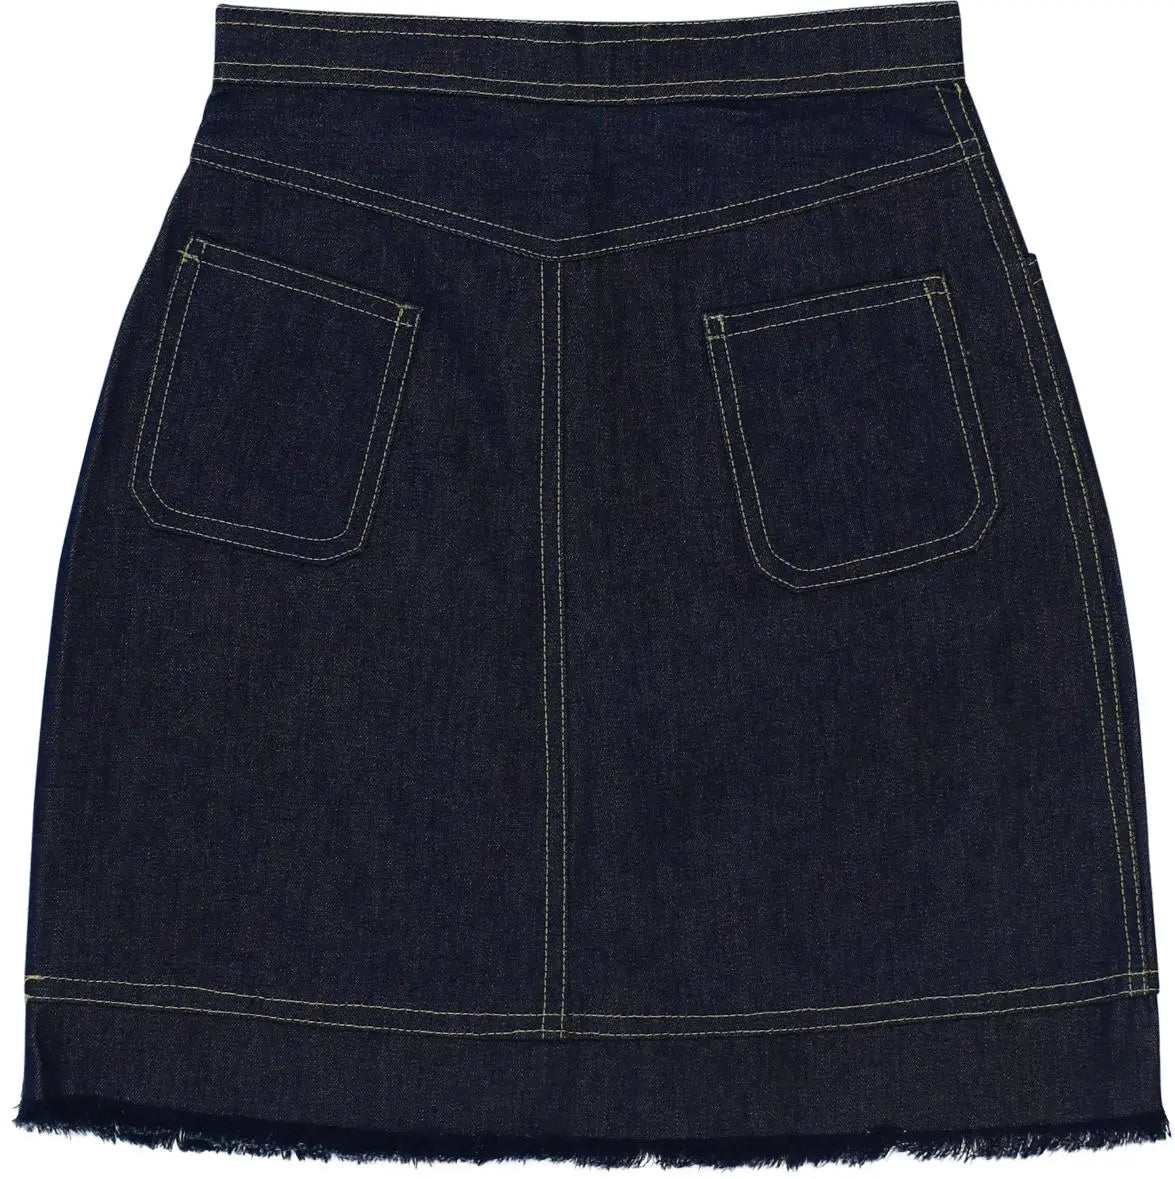 Handmade - Blue Denim Skirt- ThriftTale.com - Vintage and second handclothing